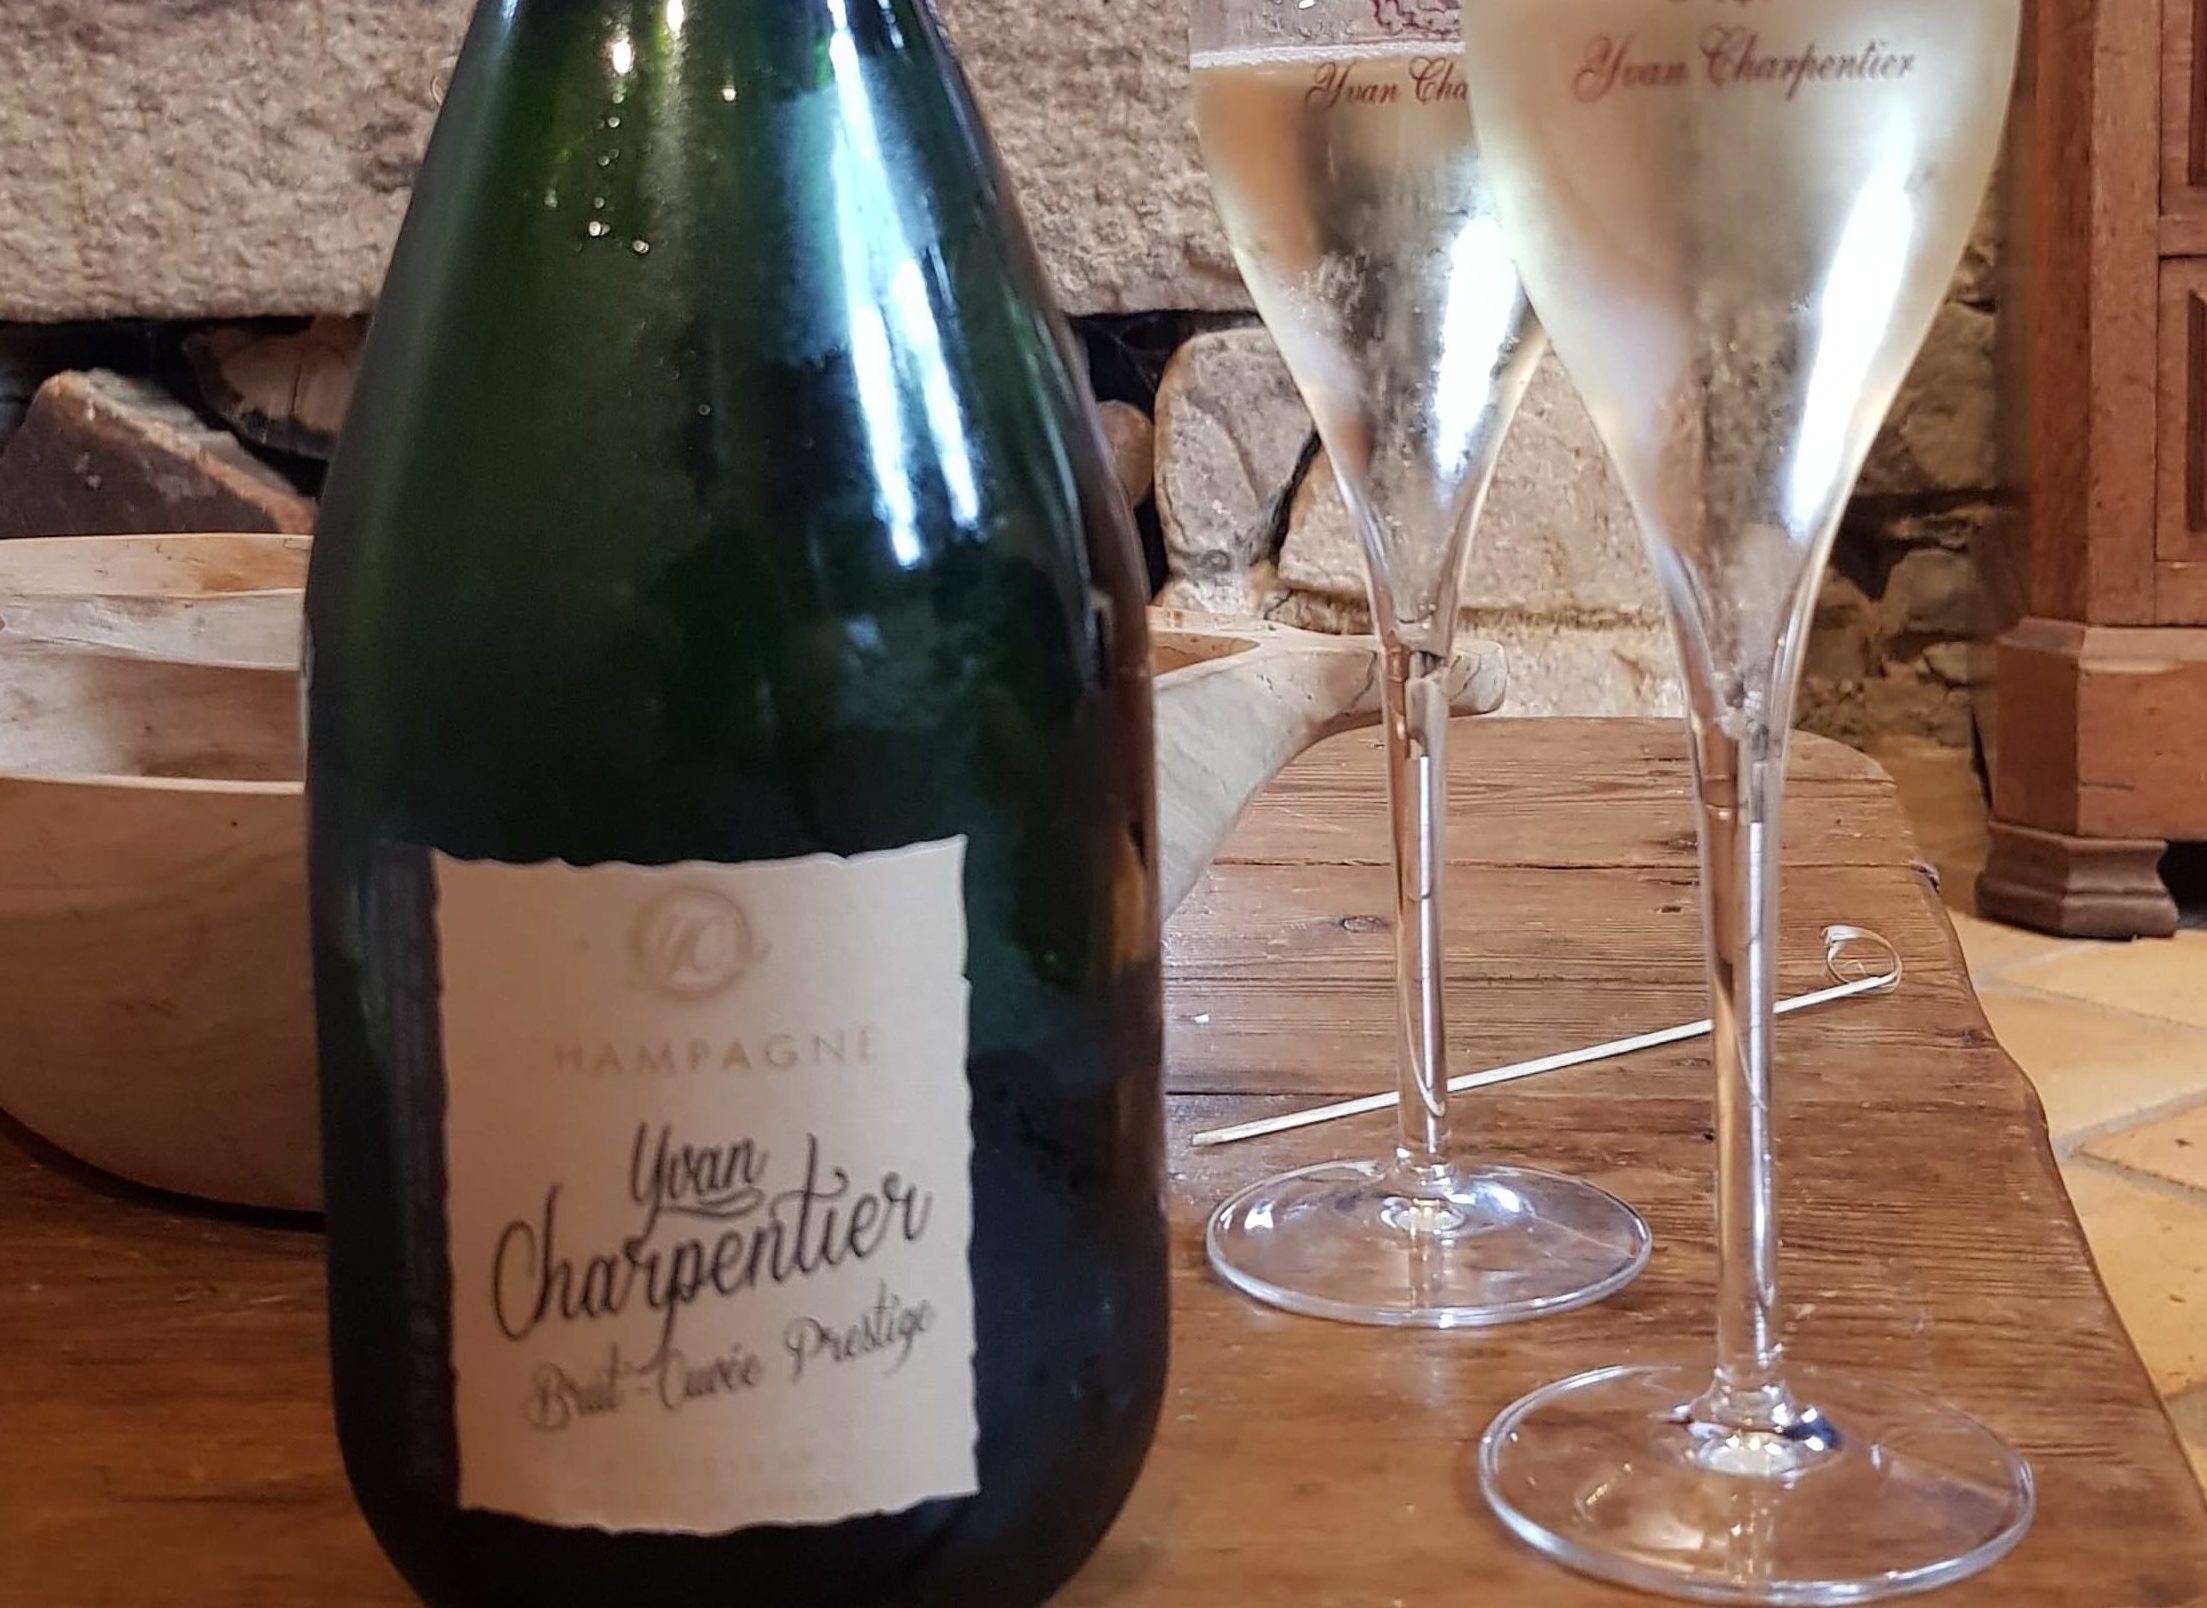 Champagne Yvan Charpentier – Cuvée Prestige